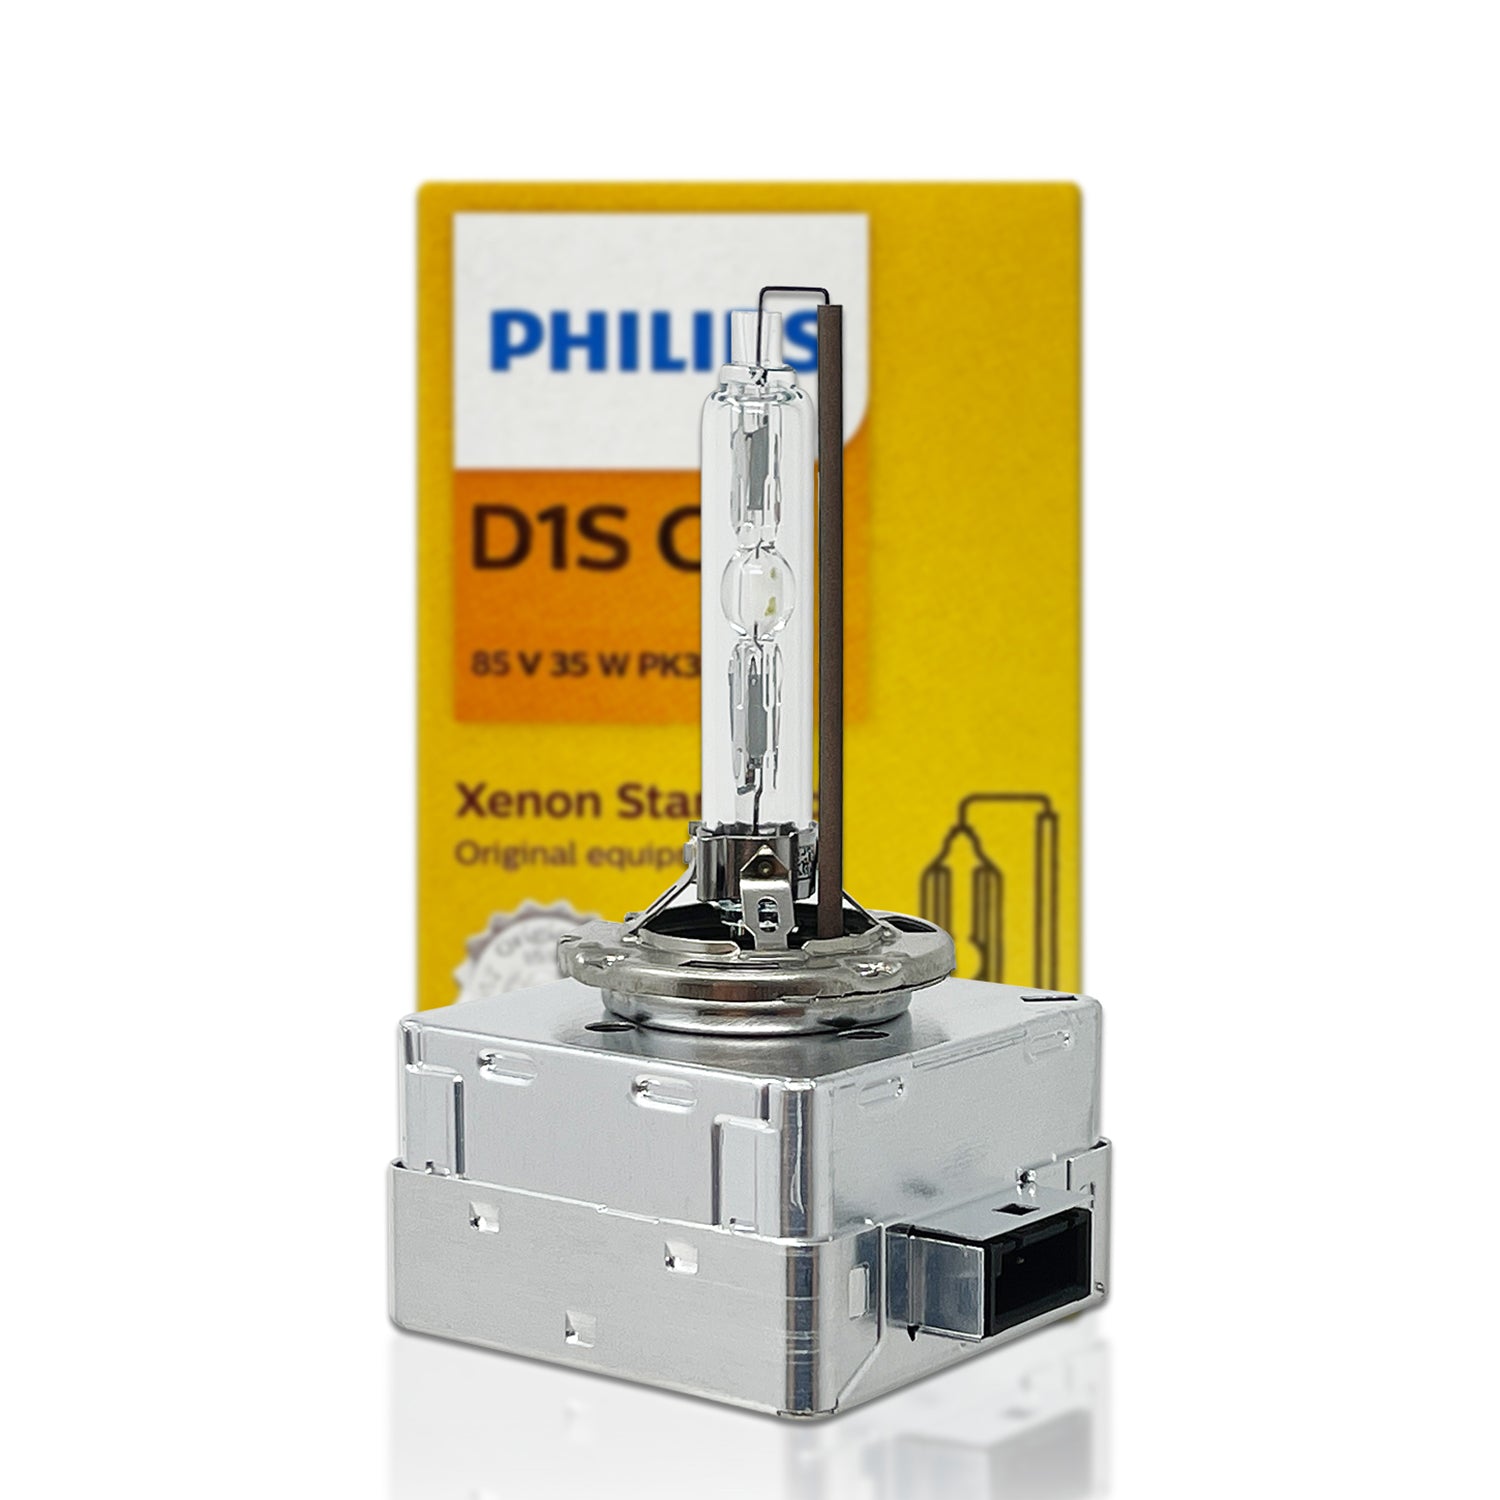 Philips 12972B1 H7 Standard Halogen Replacement Headlight Bulb, 1 Pack